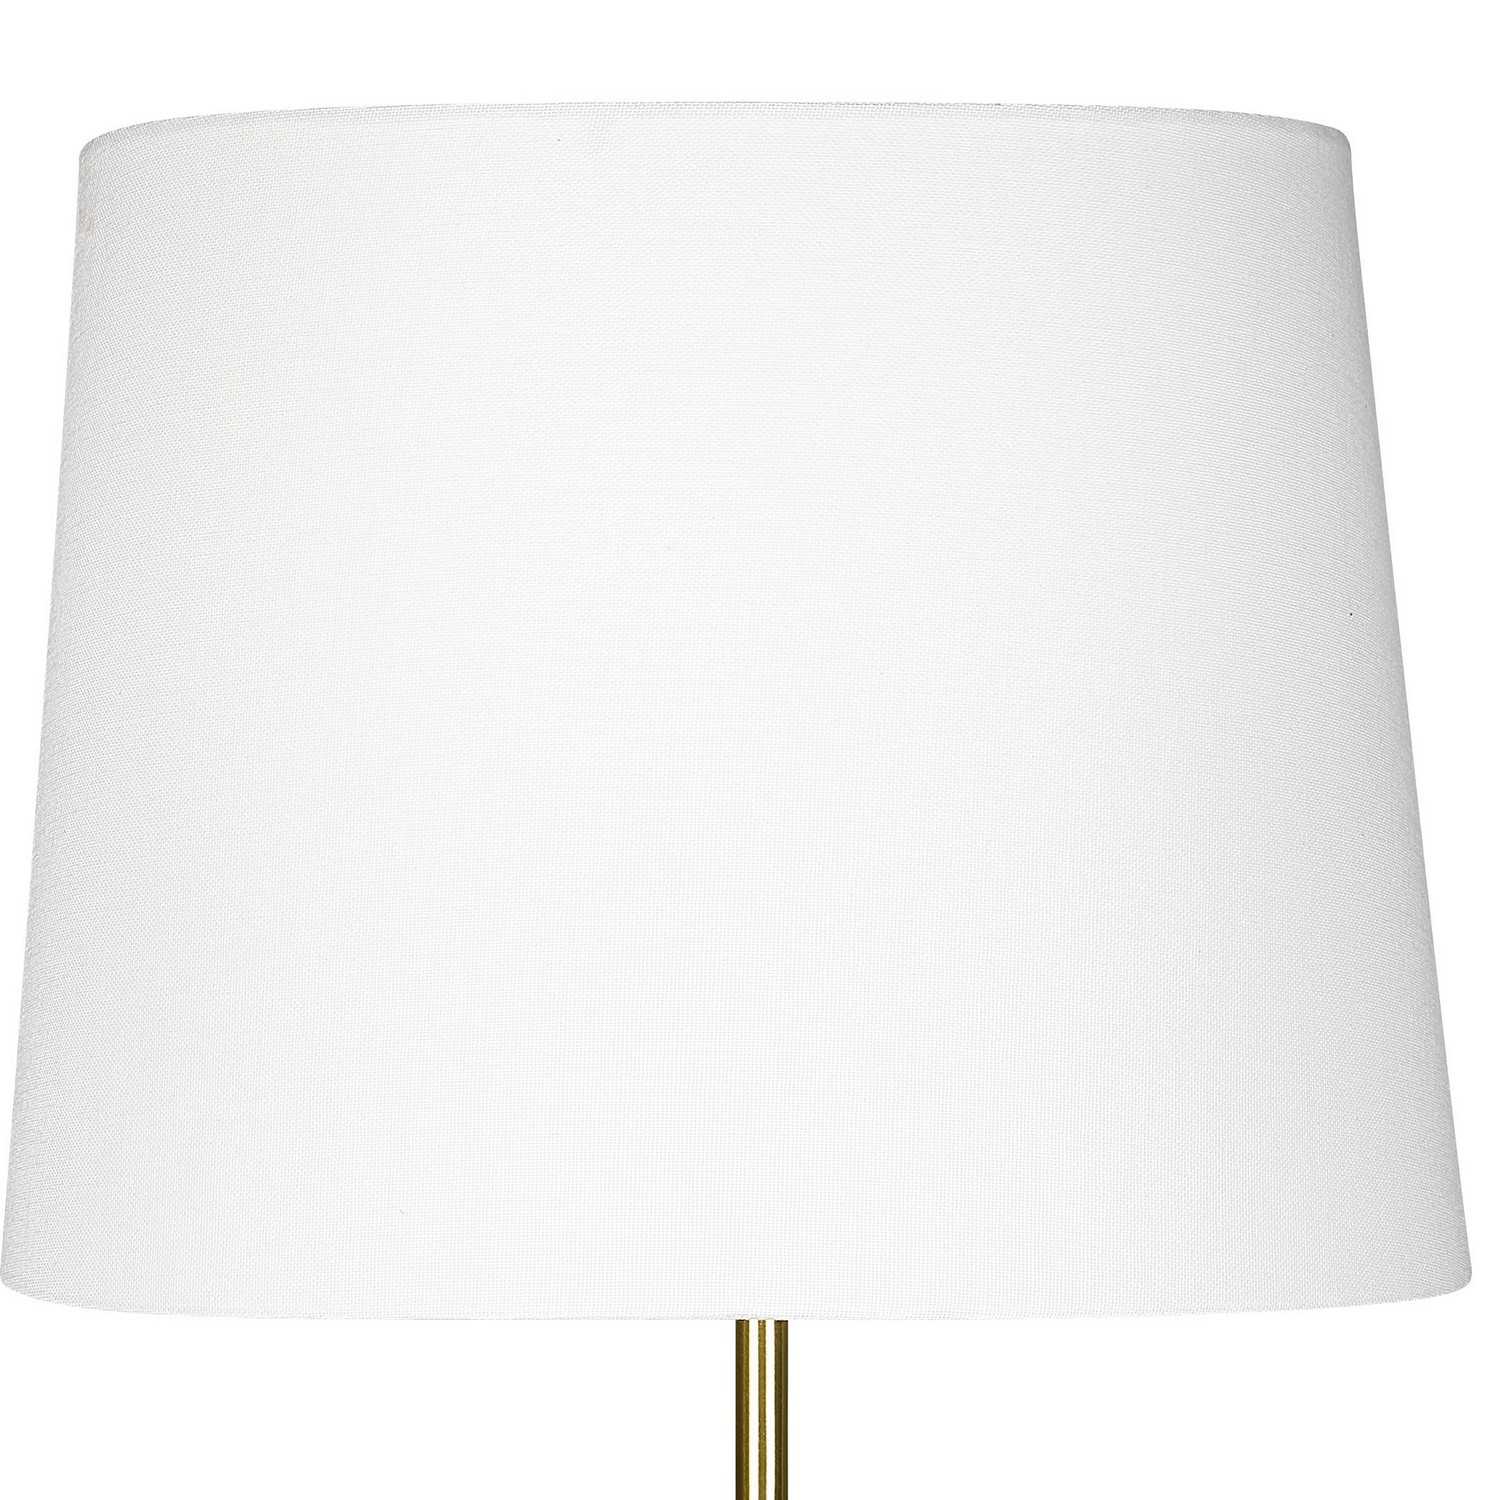 Uttermost W26088-1 Table Lamp - White Ceramic